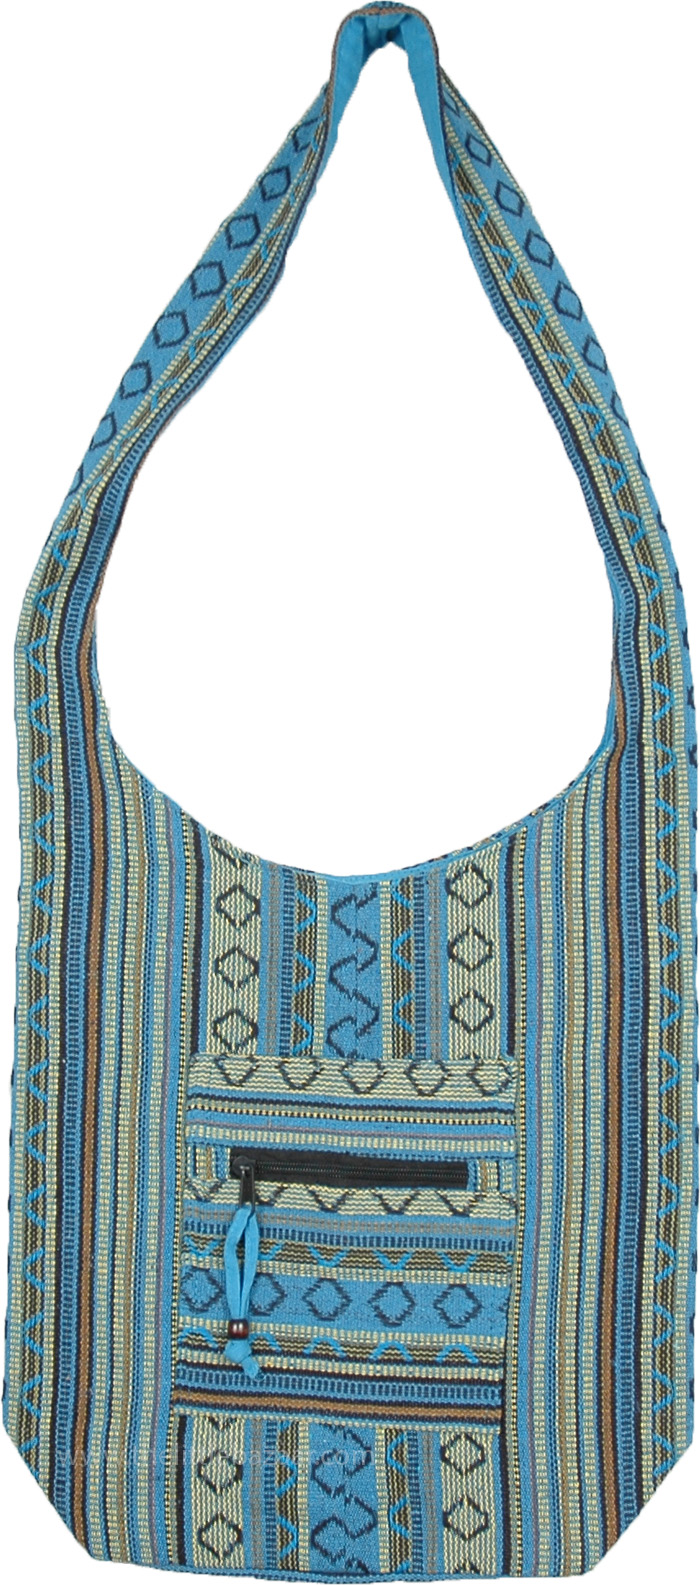 Turquoise Women Bags Handbags Jan Mk Sp - Buy Turquoise Women Bags Handbags  Jan Mk Sp online in India